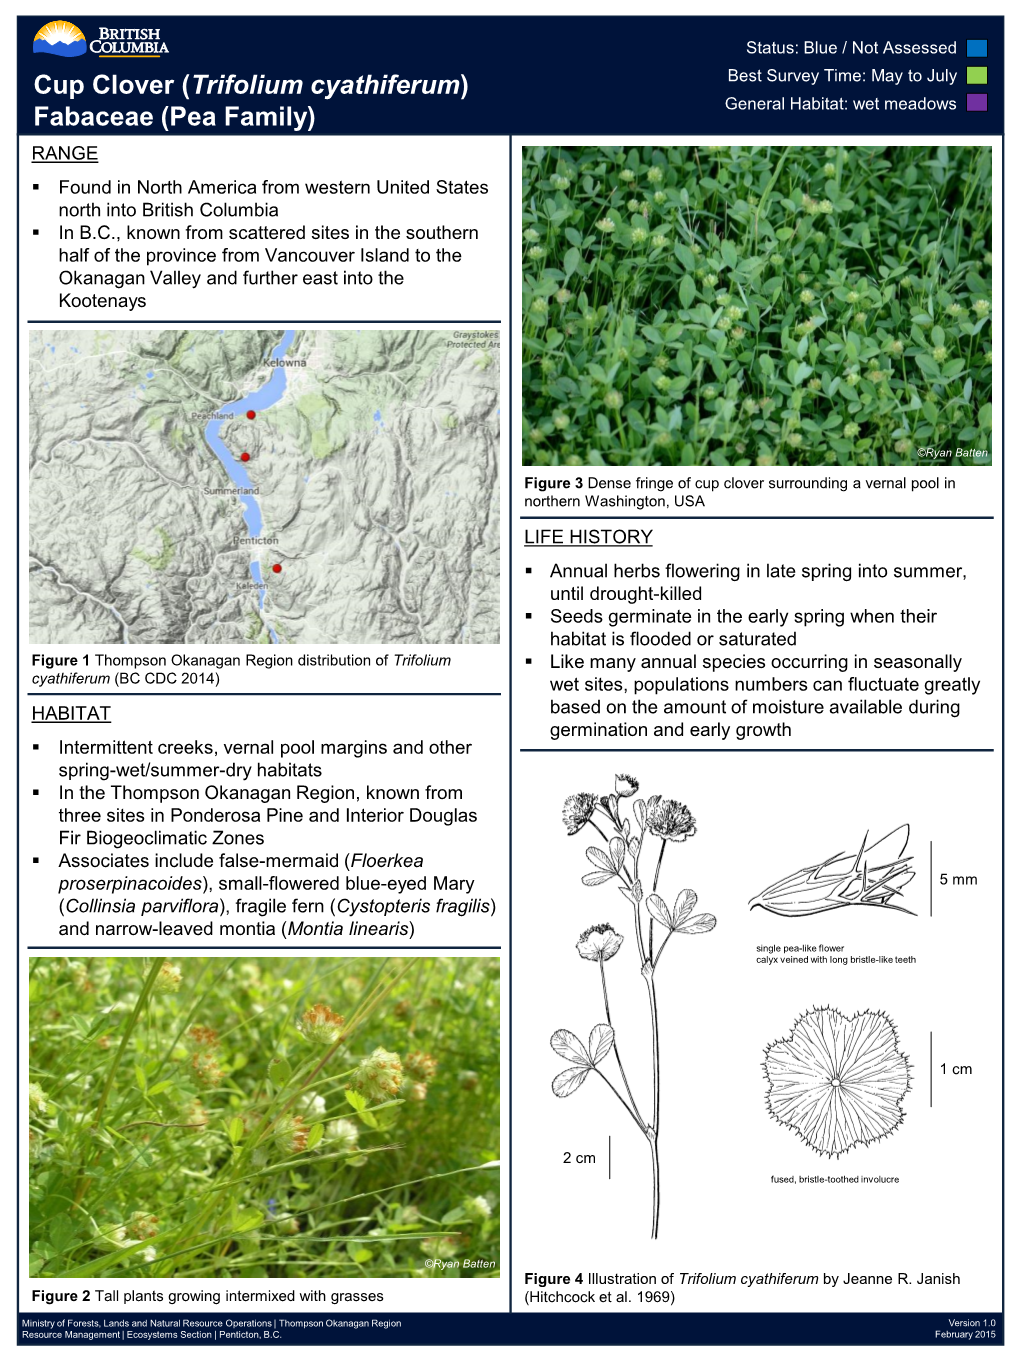 Trifolium Cyathiferum) Best Survey Time: May to July Fabaceae (Pea Family) General Habitat: Wet Meadows RANGE